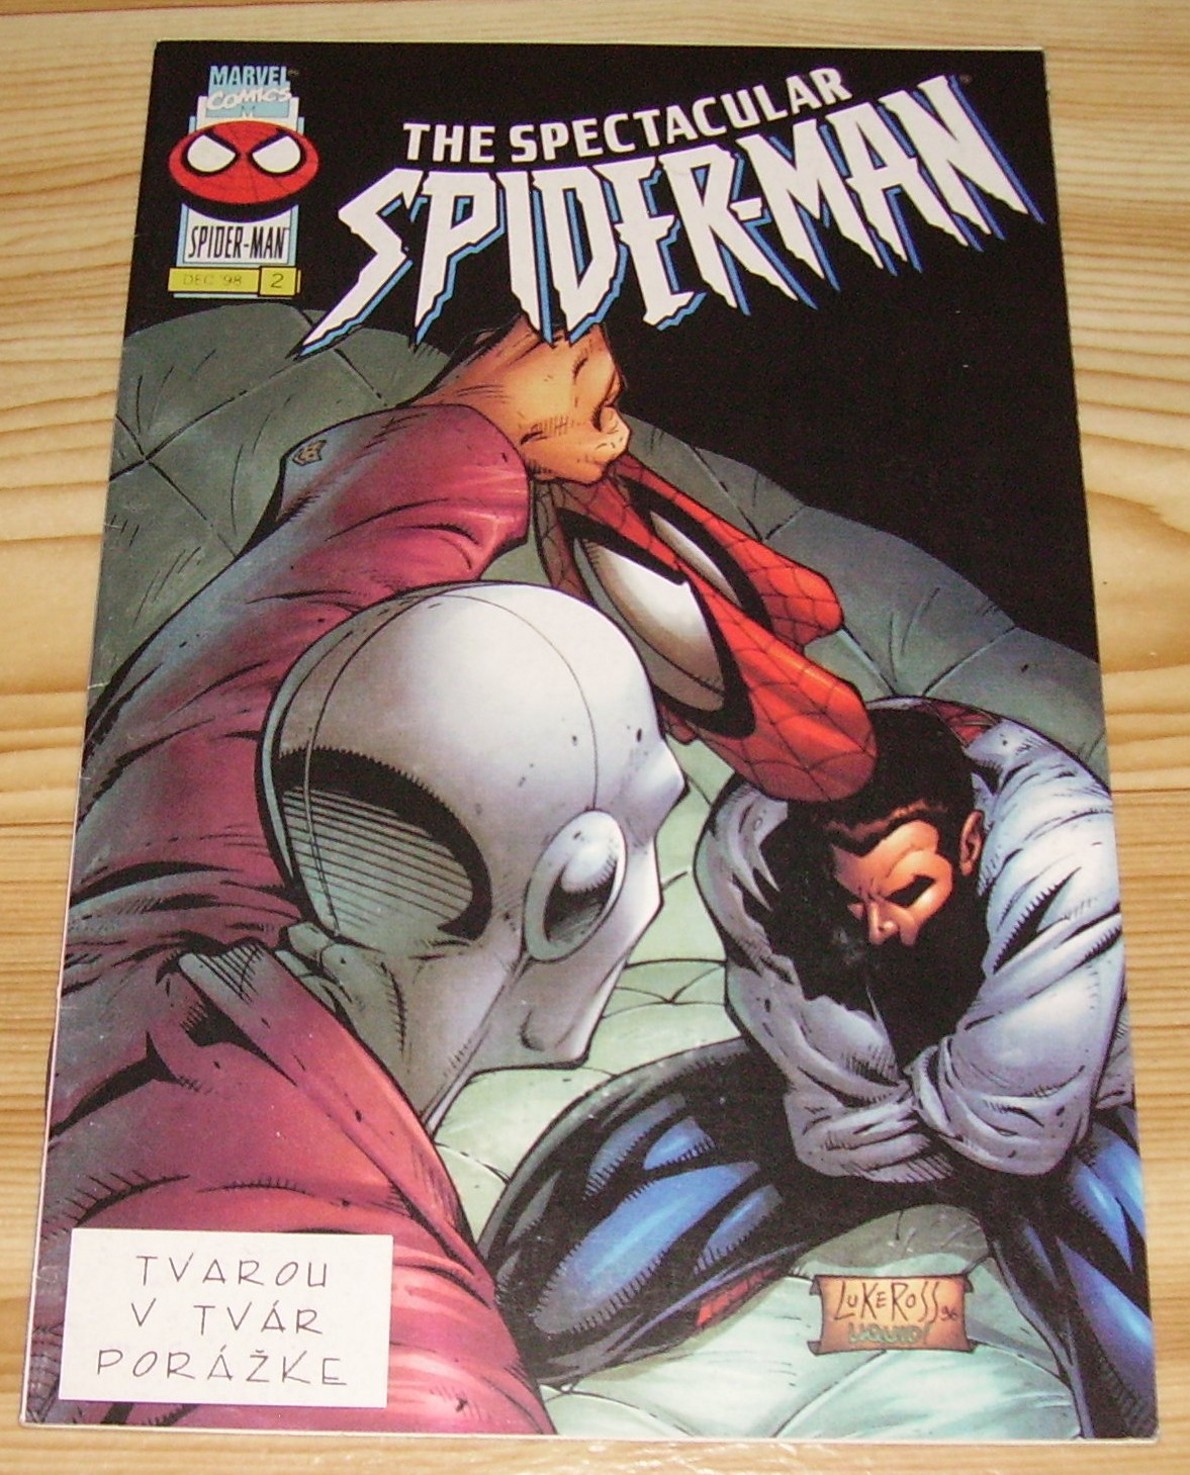 The Amazing Spider-Man #6 (SK)